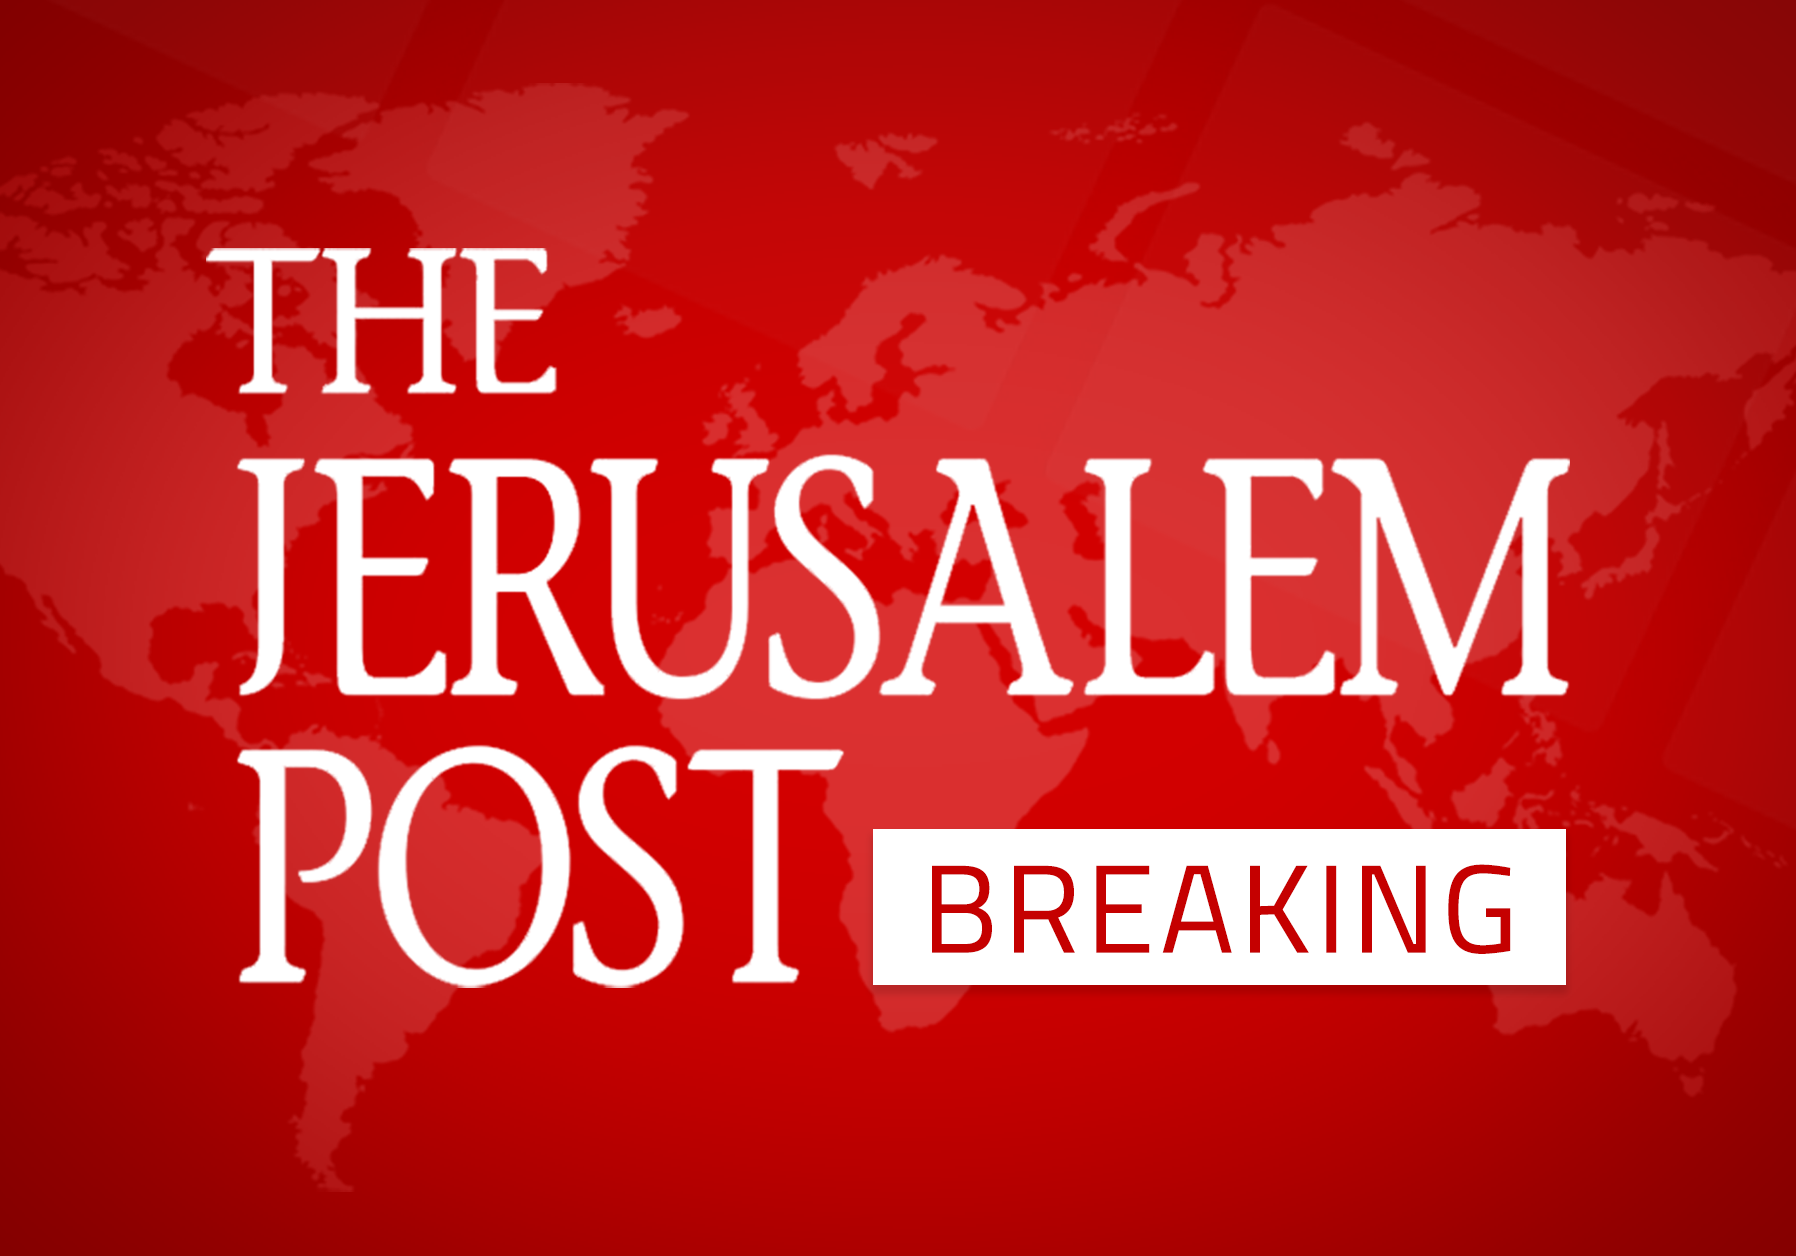 Madoff sons' estates in $23 million settlement over Ponzi scheme - The Jerusalem Post